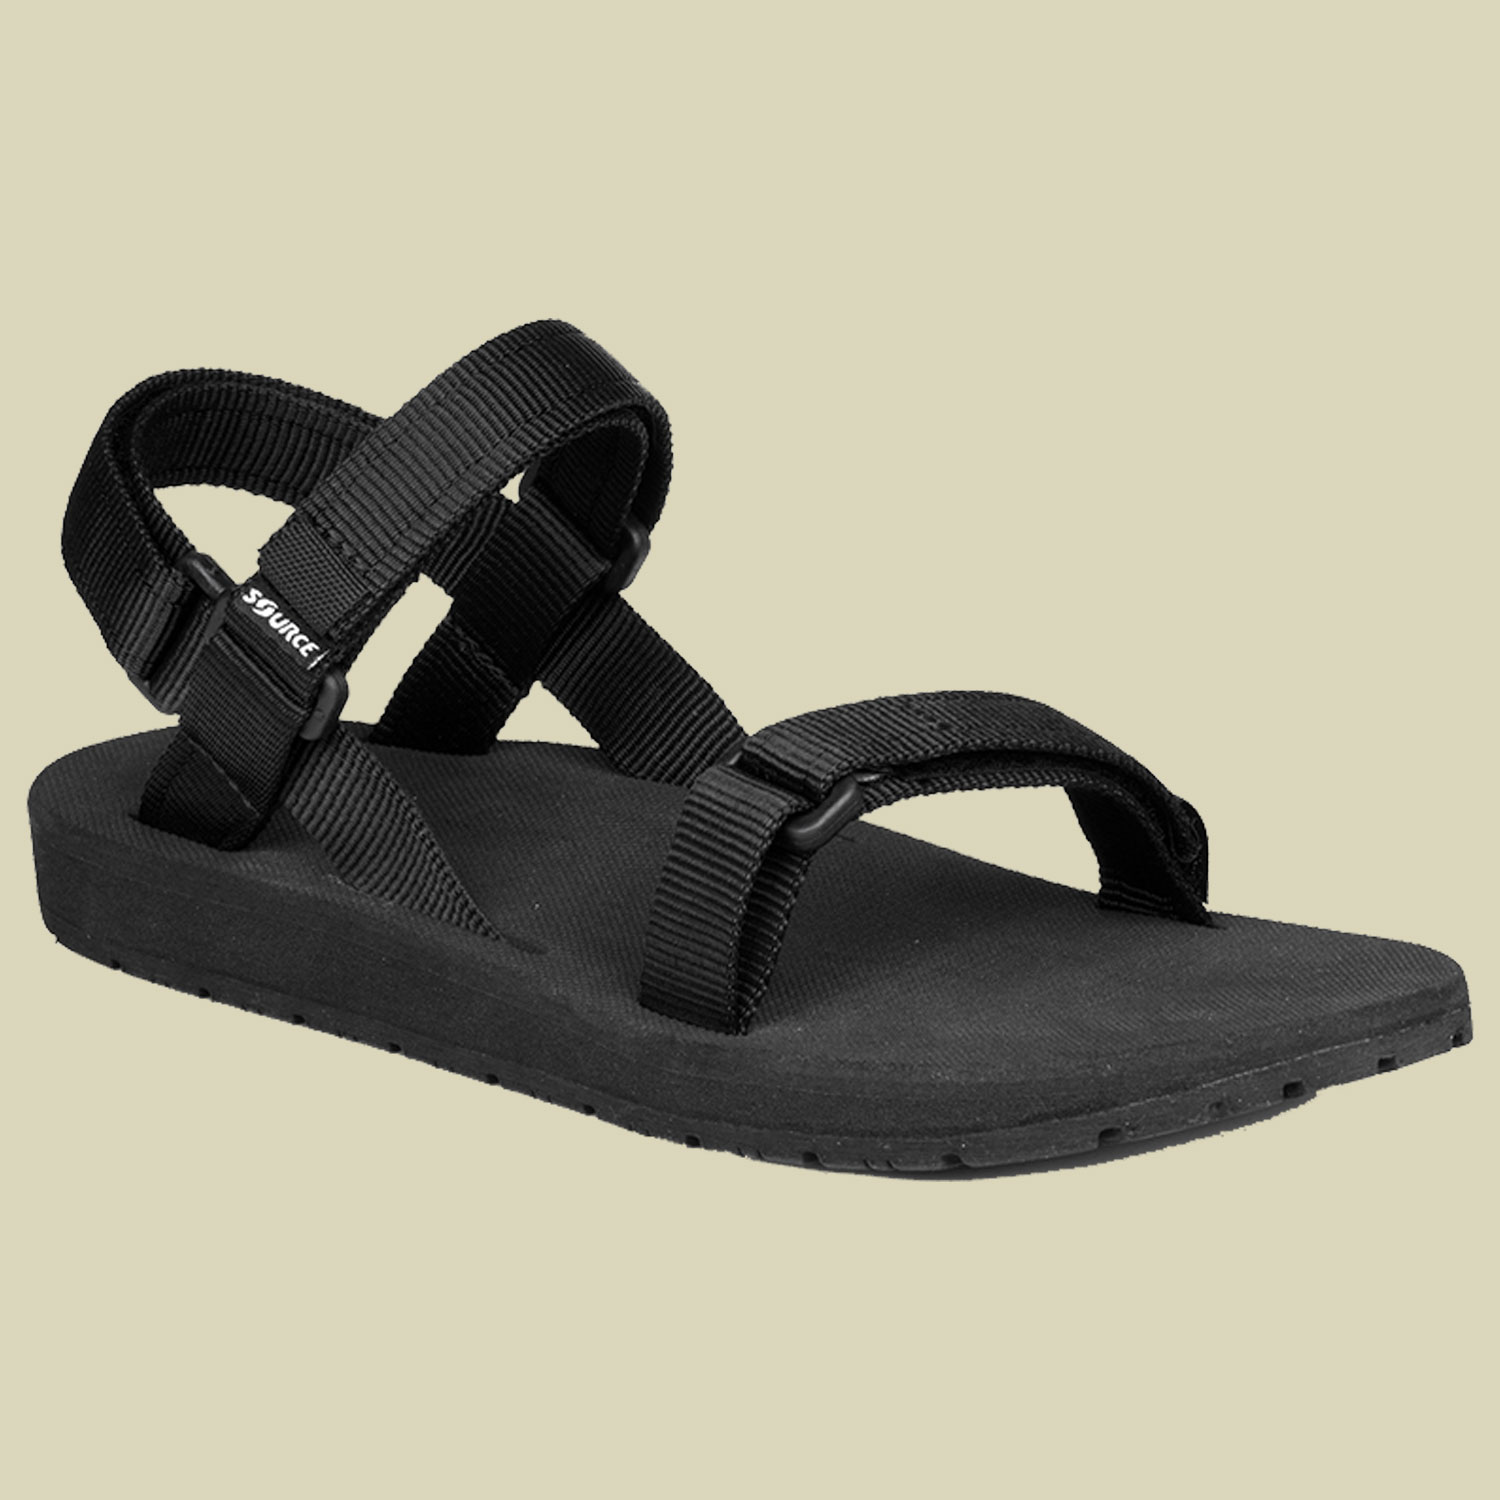 Classic Sandale Women Größe 42 Farbe black